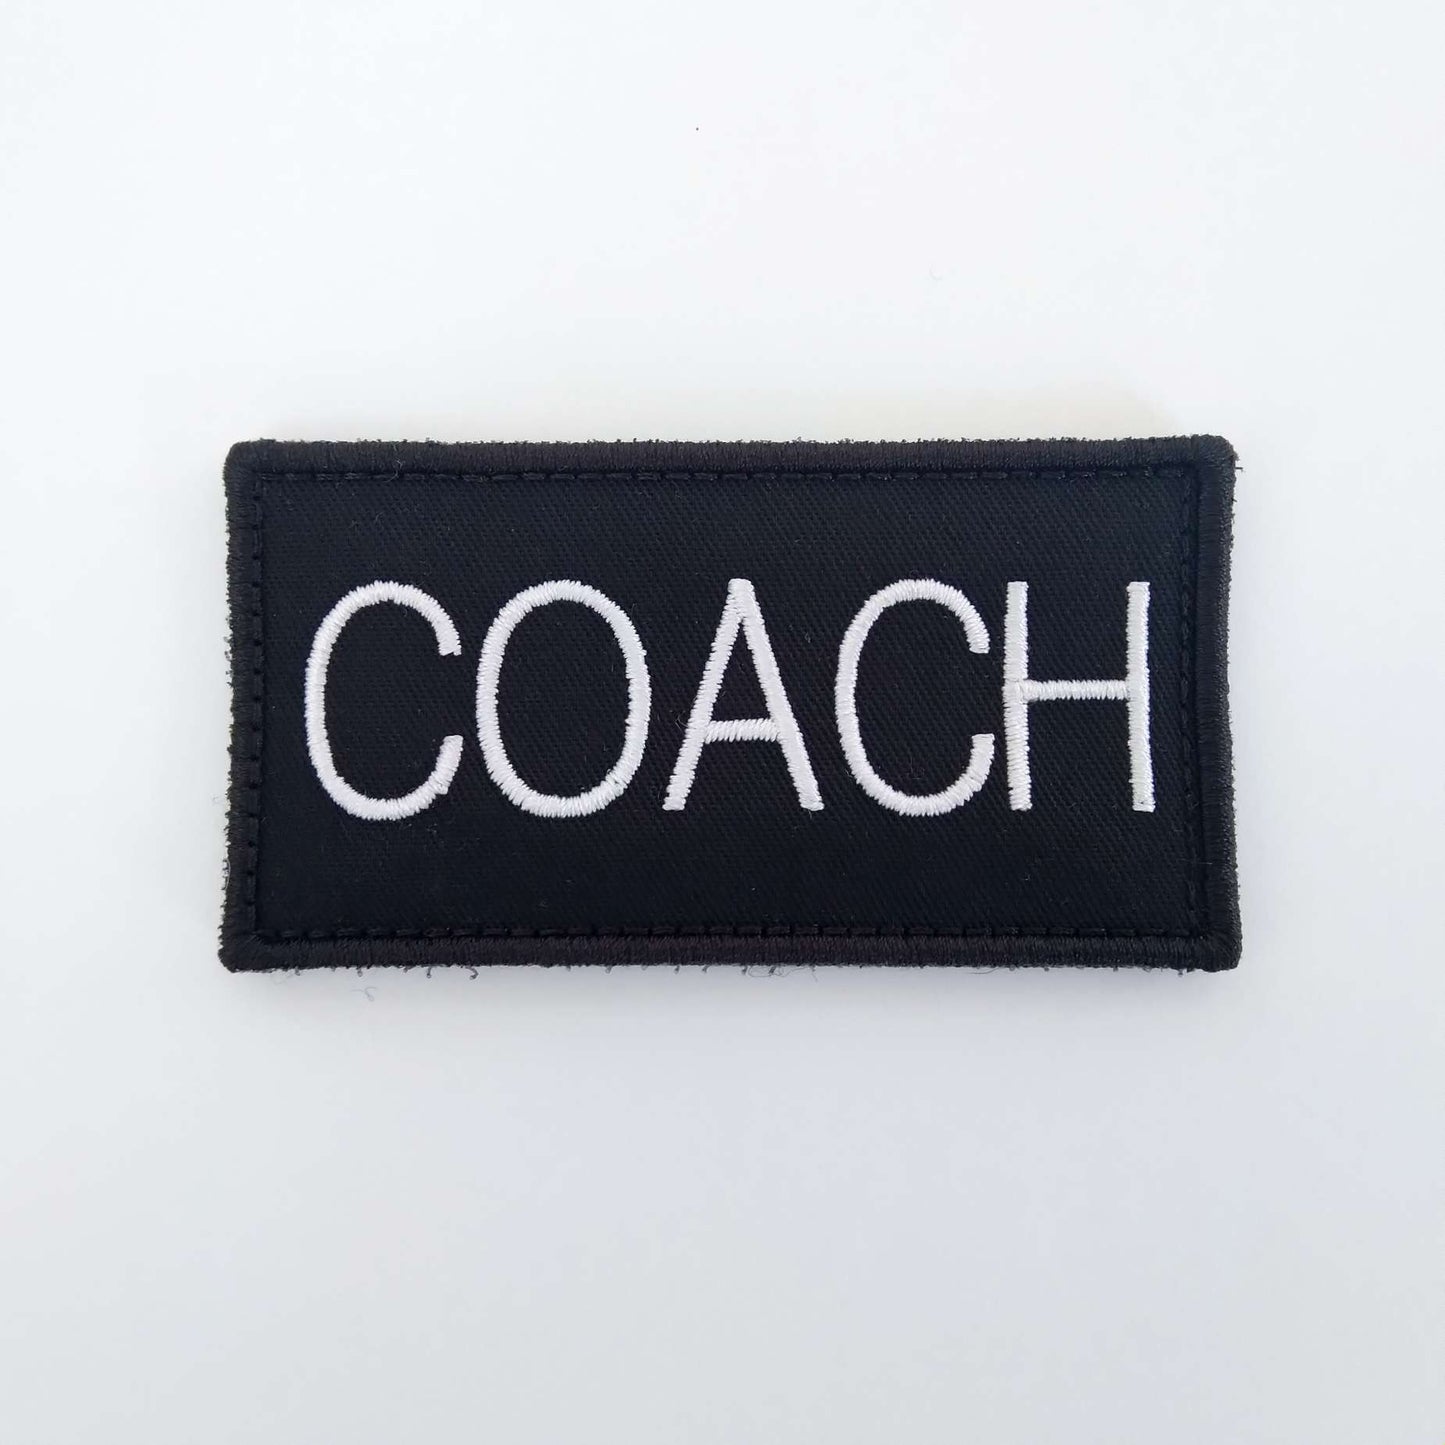 Patch "Coach"